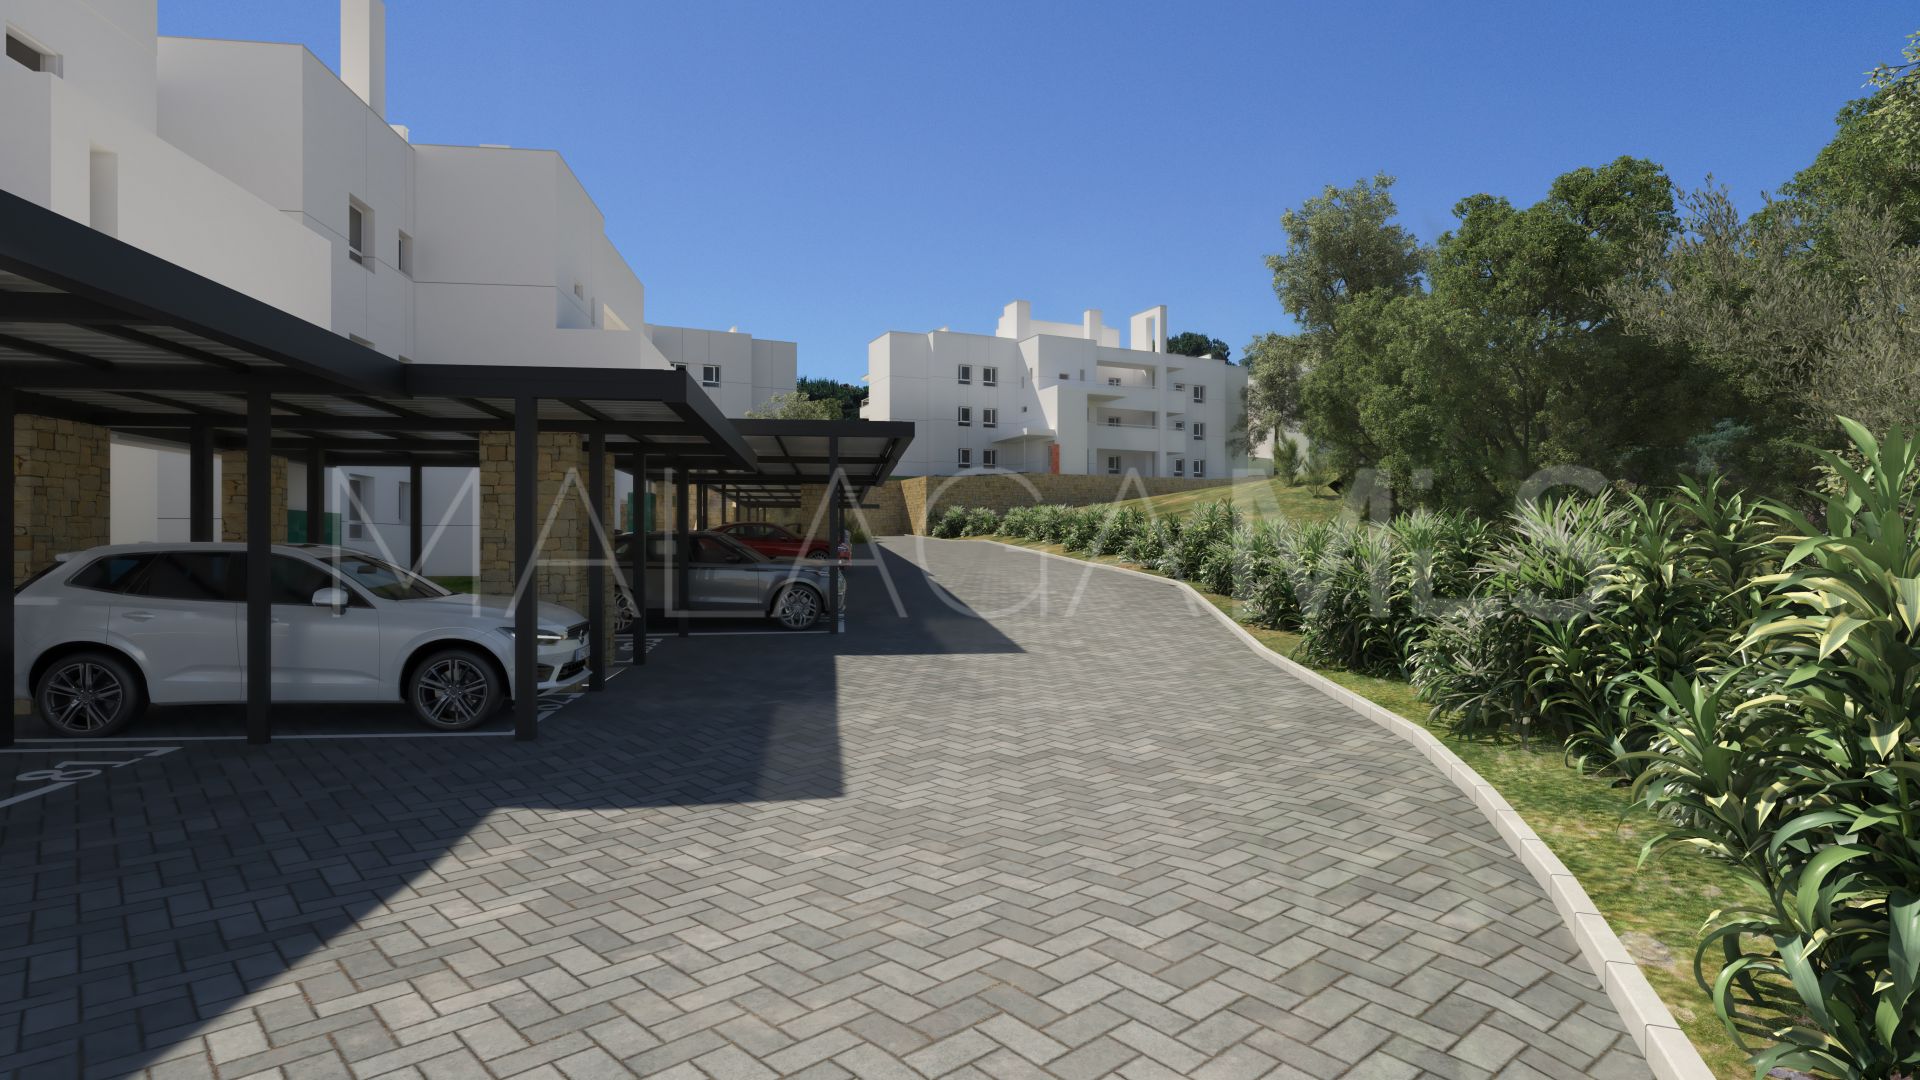 Lägenhet for sale in La Cala Golf Resort